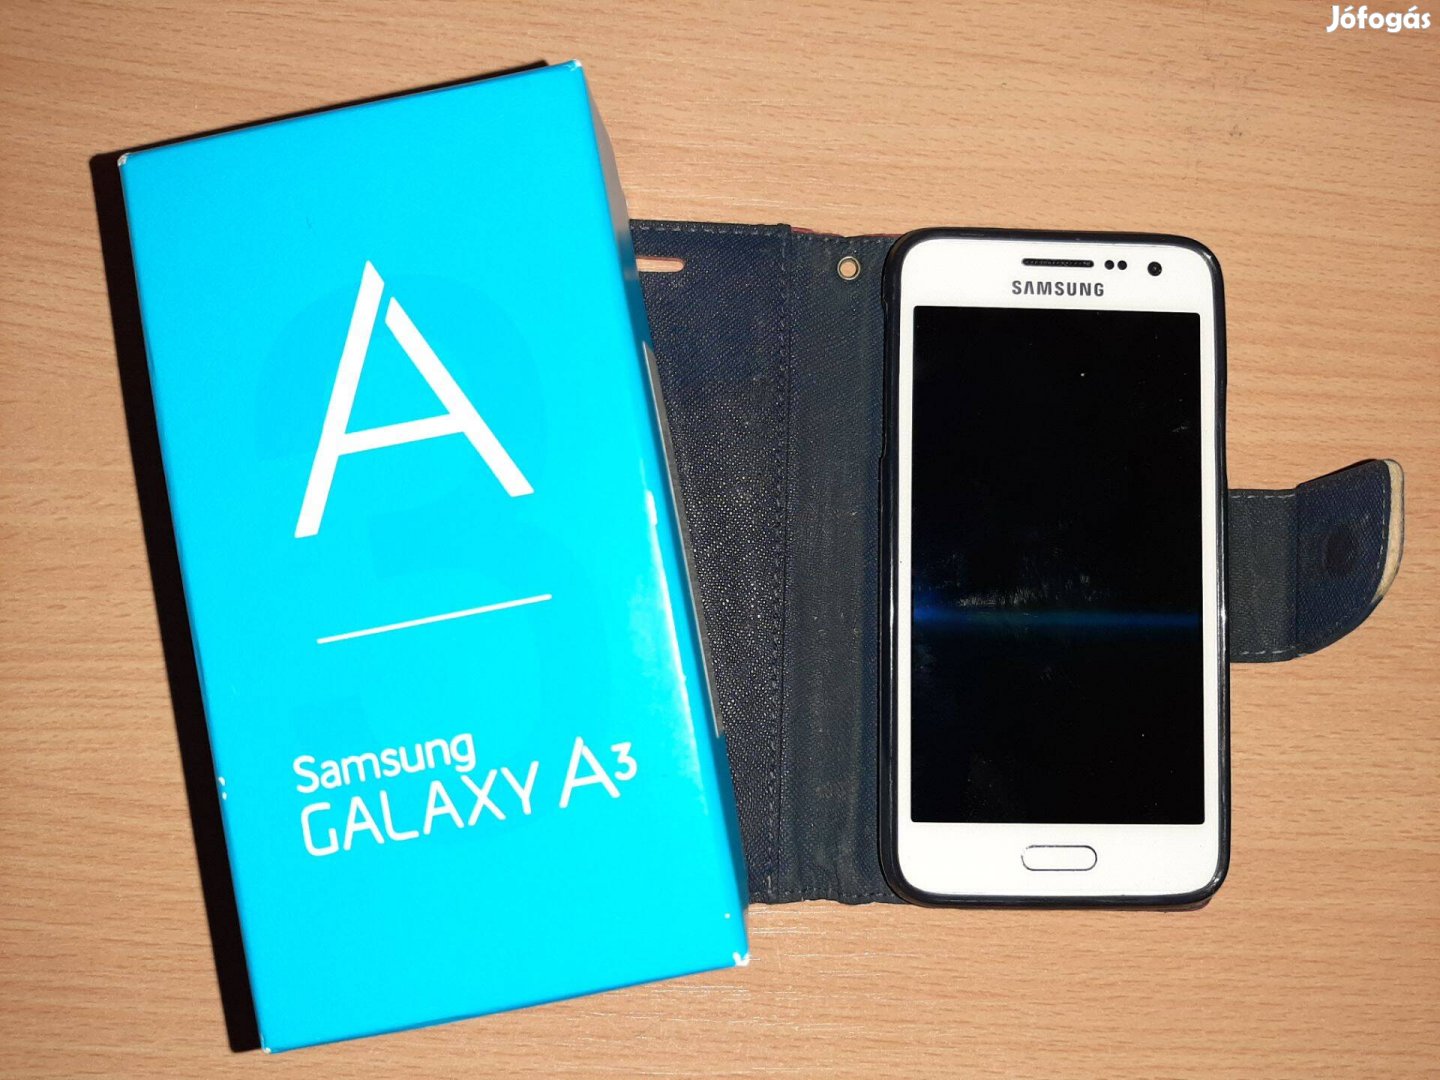 Samsung Galaxy A3 (SM-A300FD) dual SIM mobiltelefon